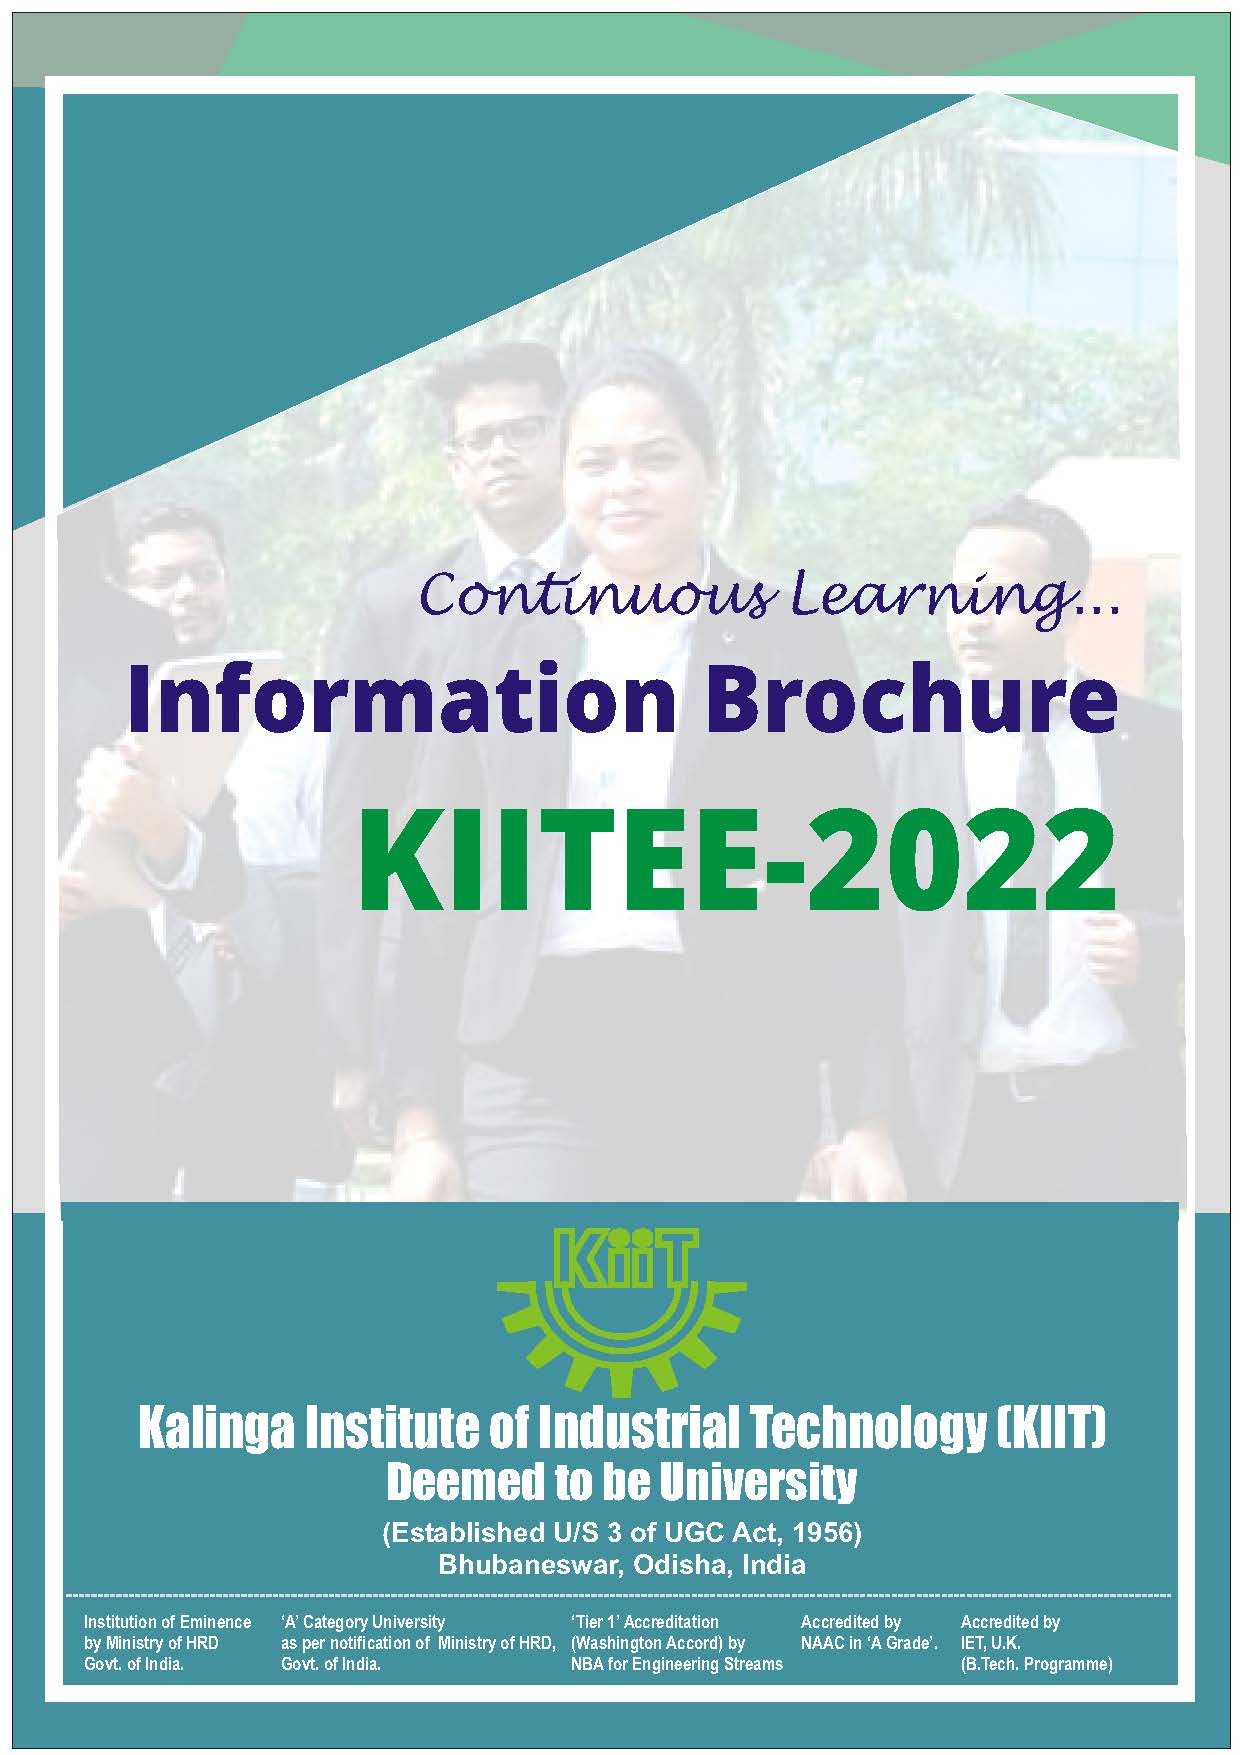 KIITEE Information Brochure 2022